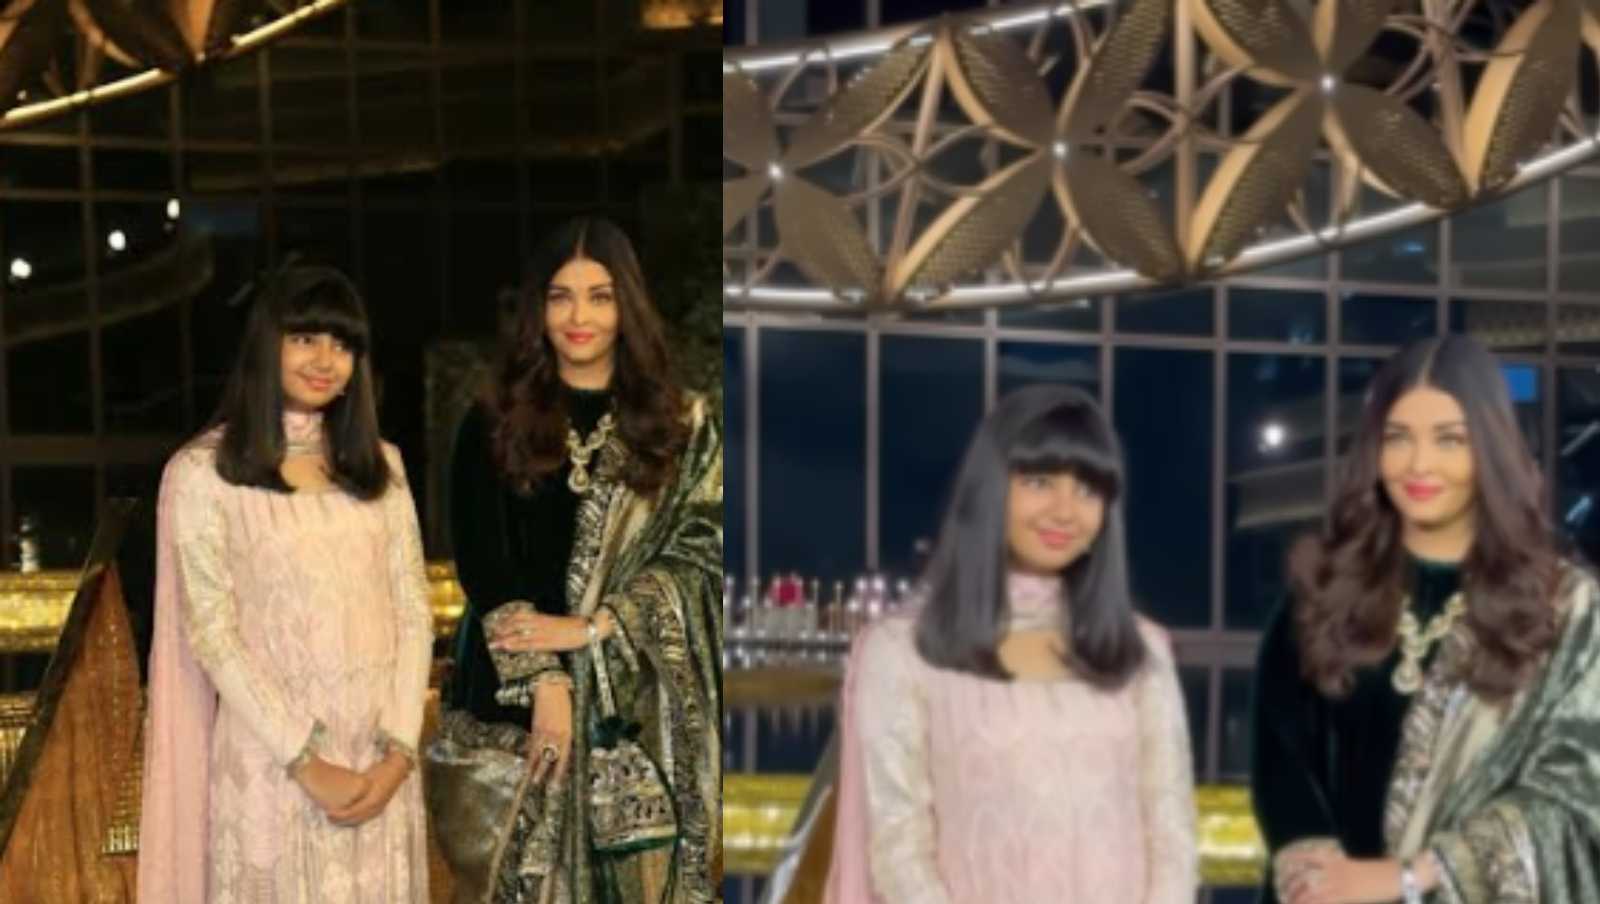 'Bachi ka hairstyle change karo' : Netizens troll Aishwarya Rai Bachchan's daughter Aaradhya's hairdo at the Ambani event